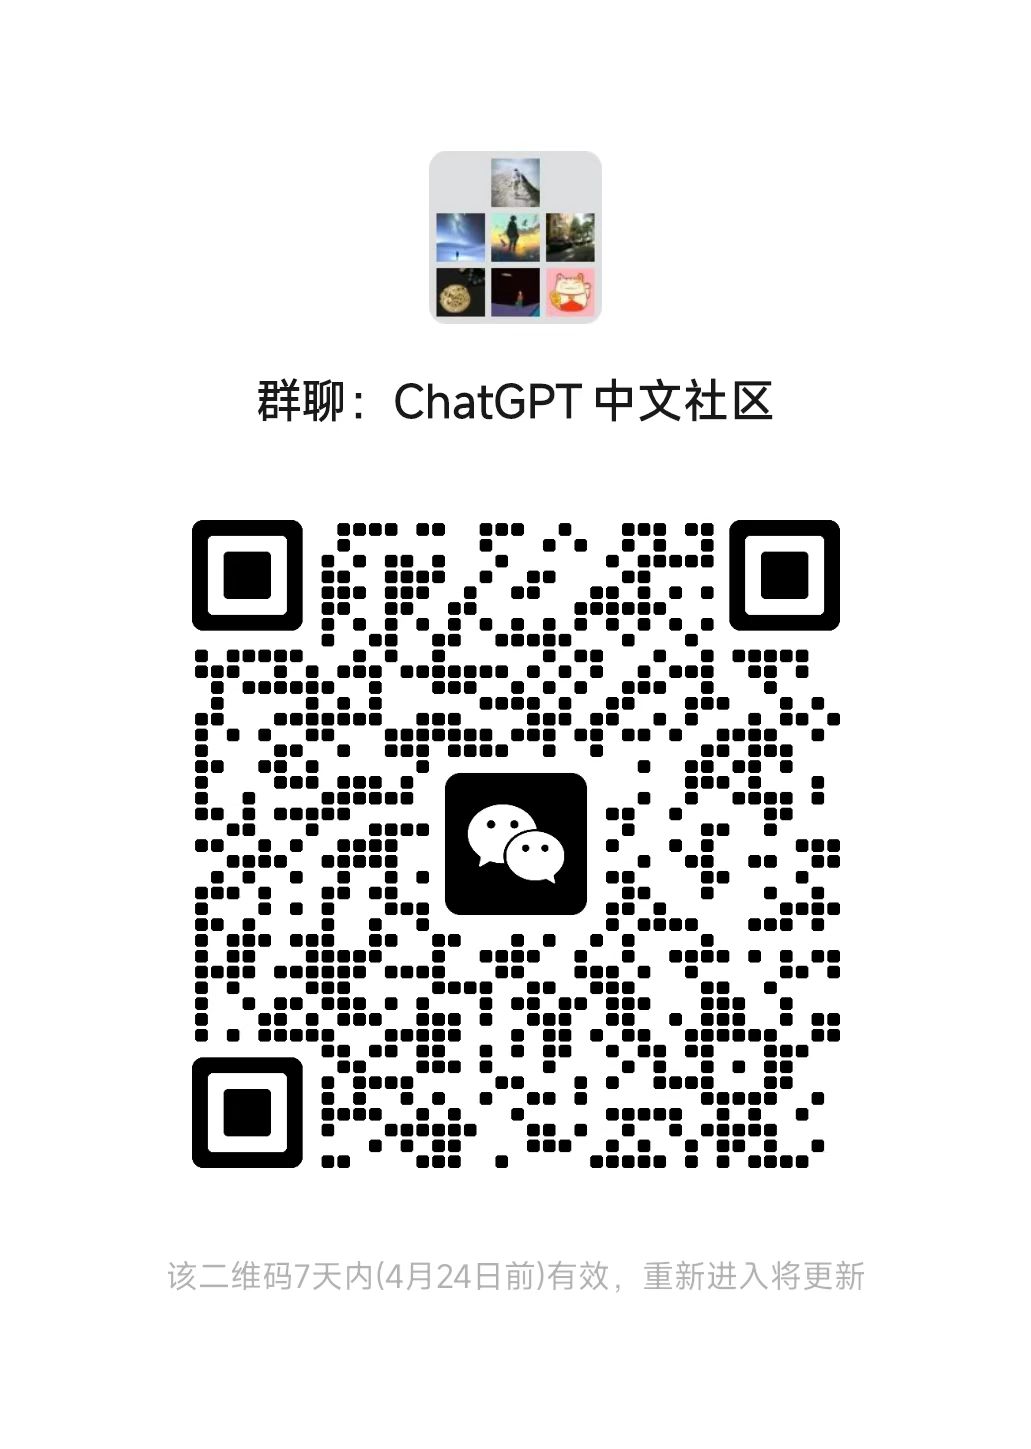 ChatGPT中文社区